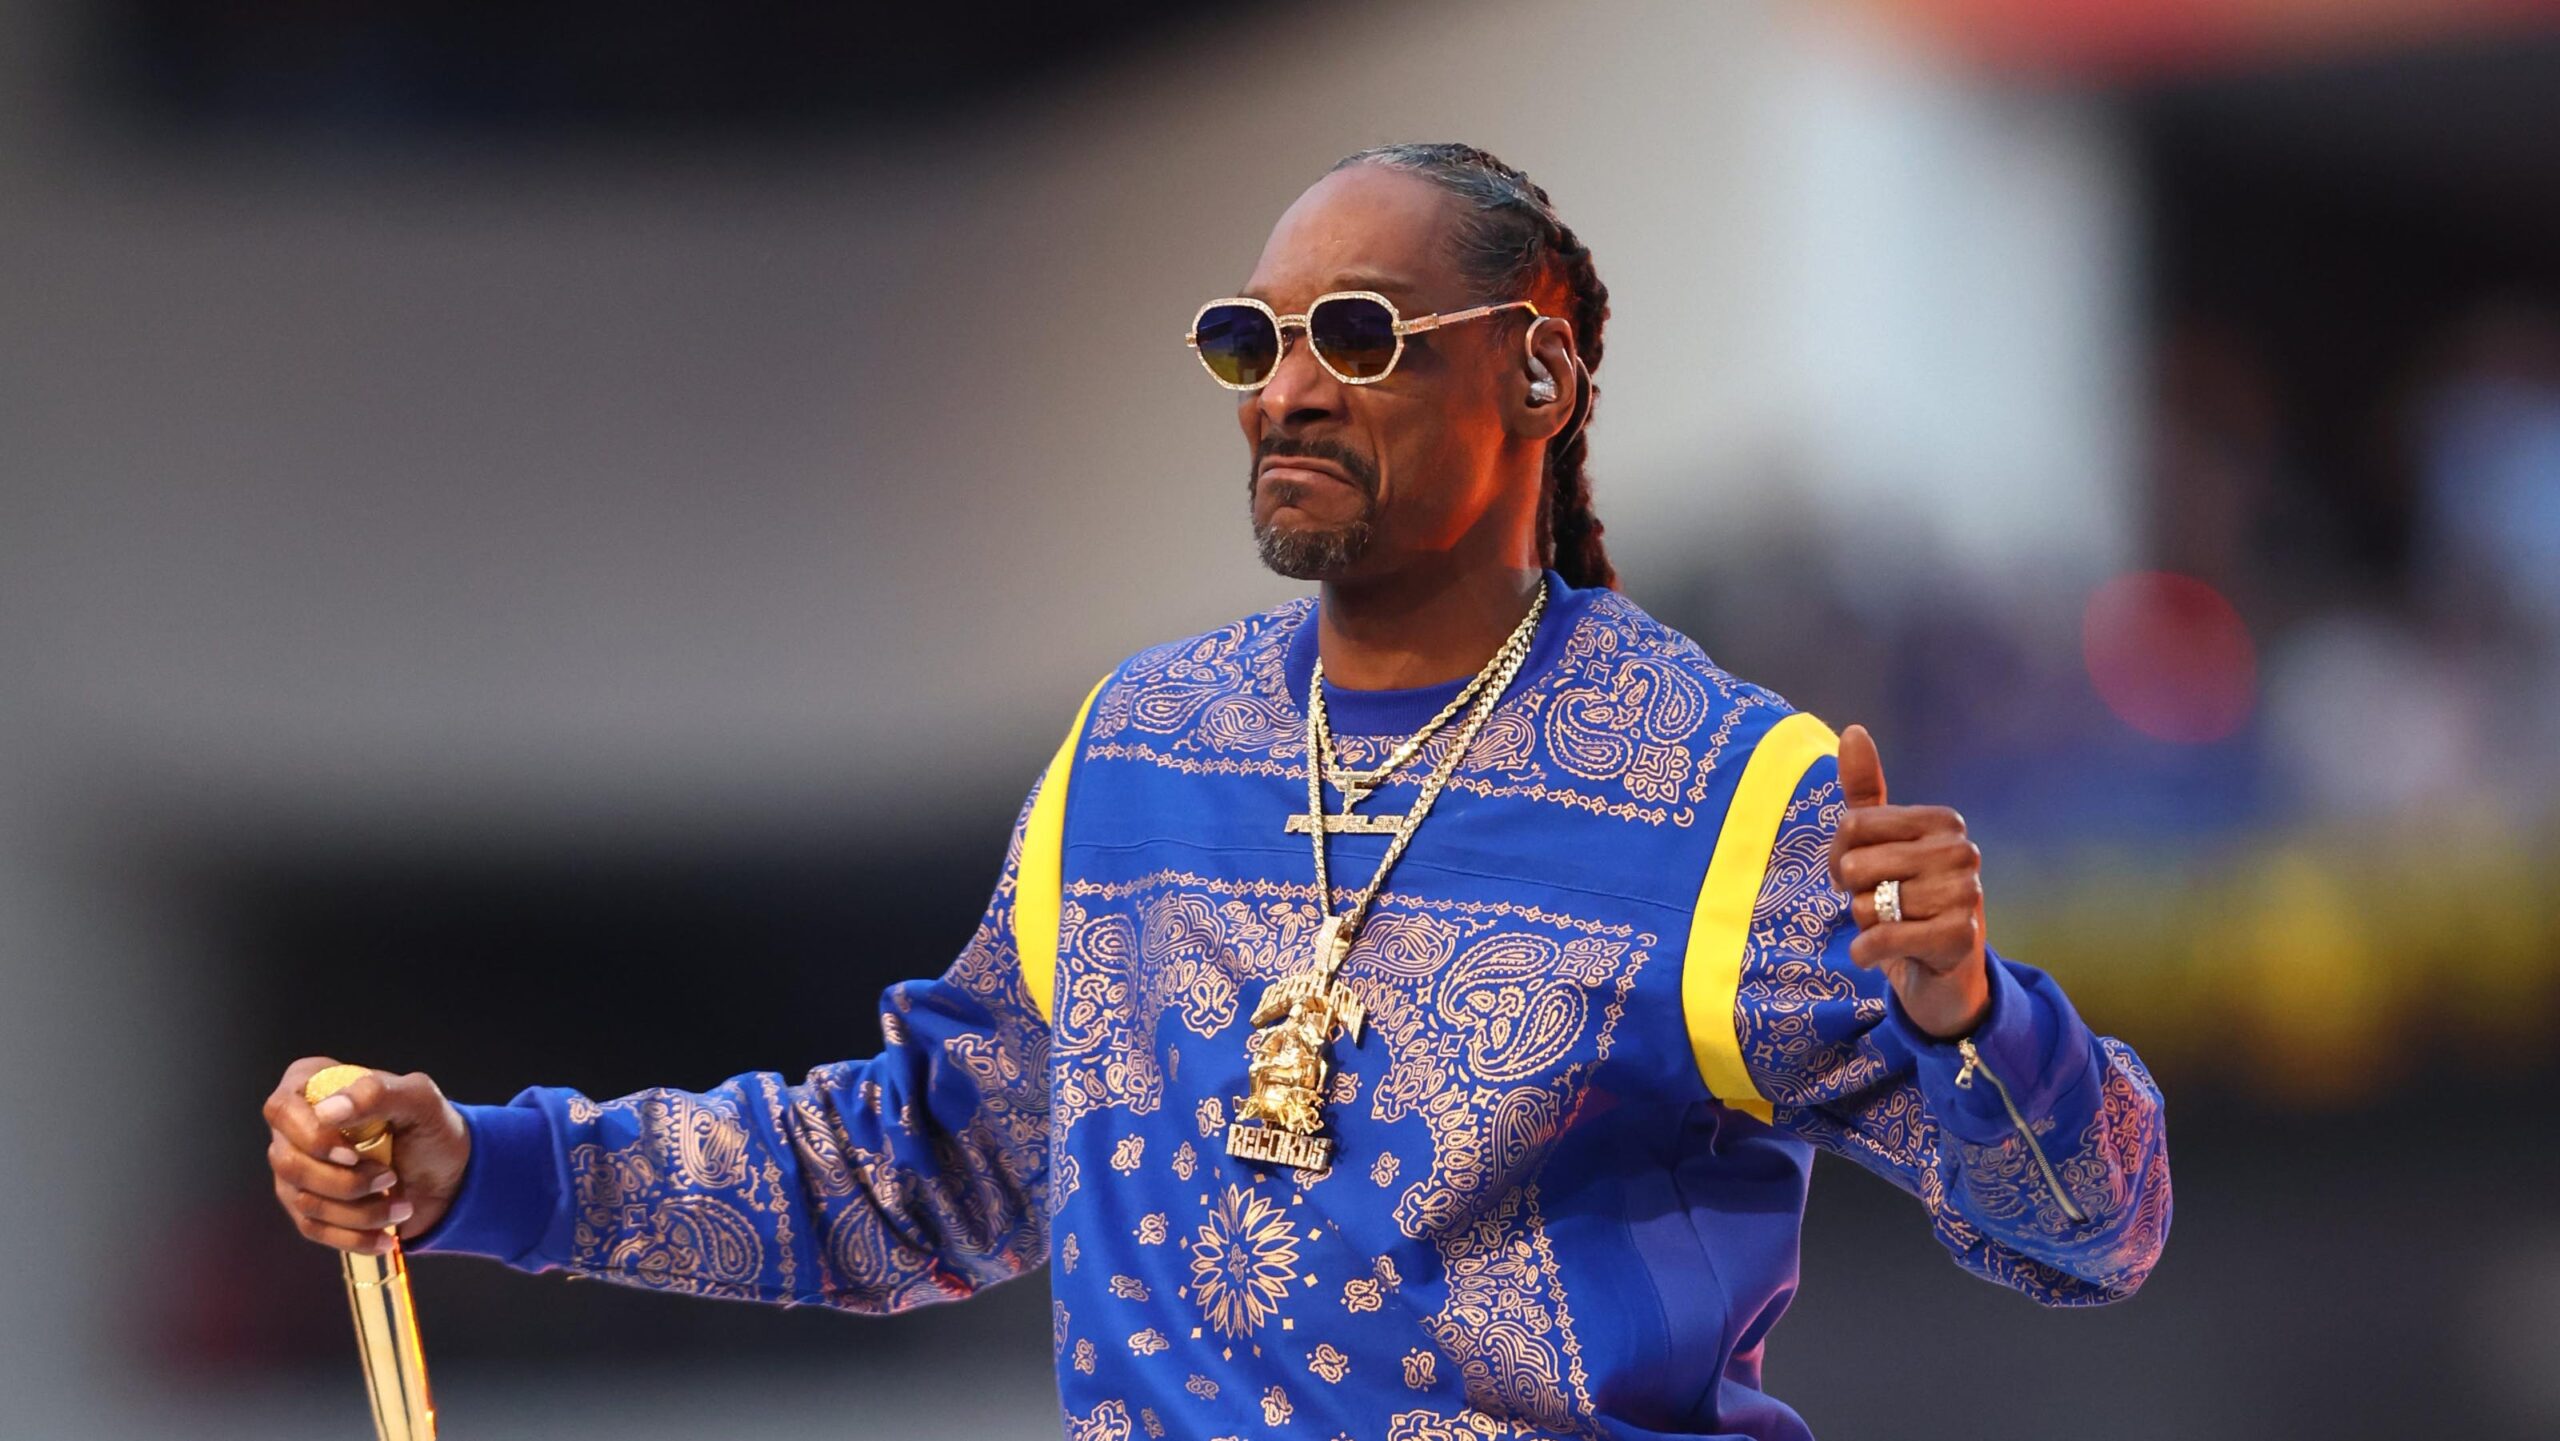 Snoop Dogg's Music Career Highlights